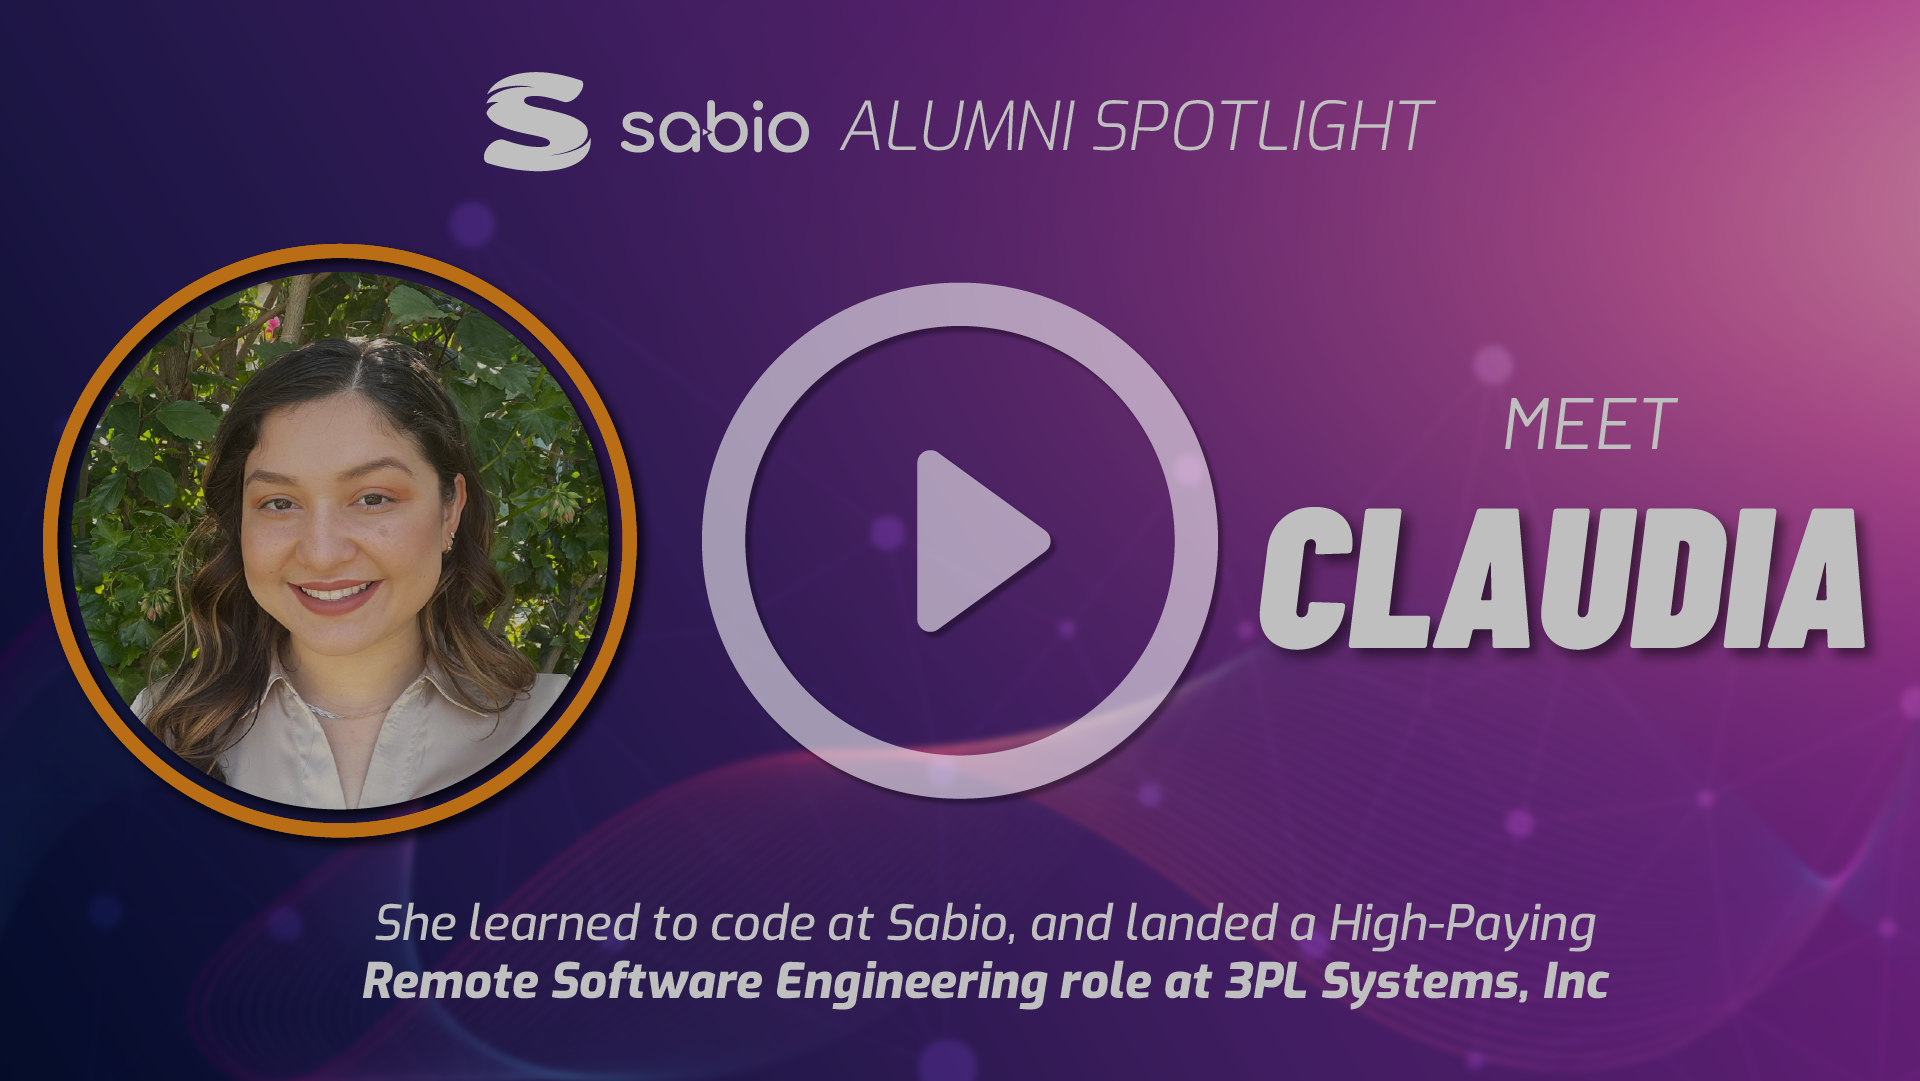 Sabio Alumni Spotlight: Claudia. Play symbol overlaid to the image.